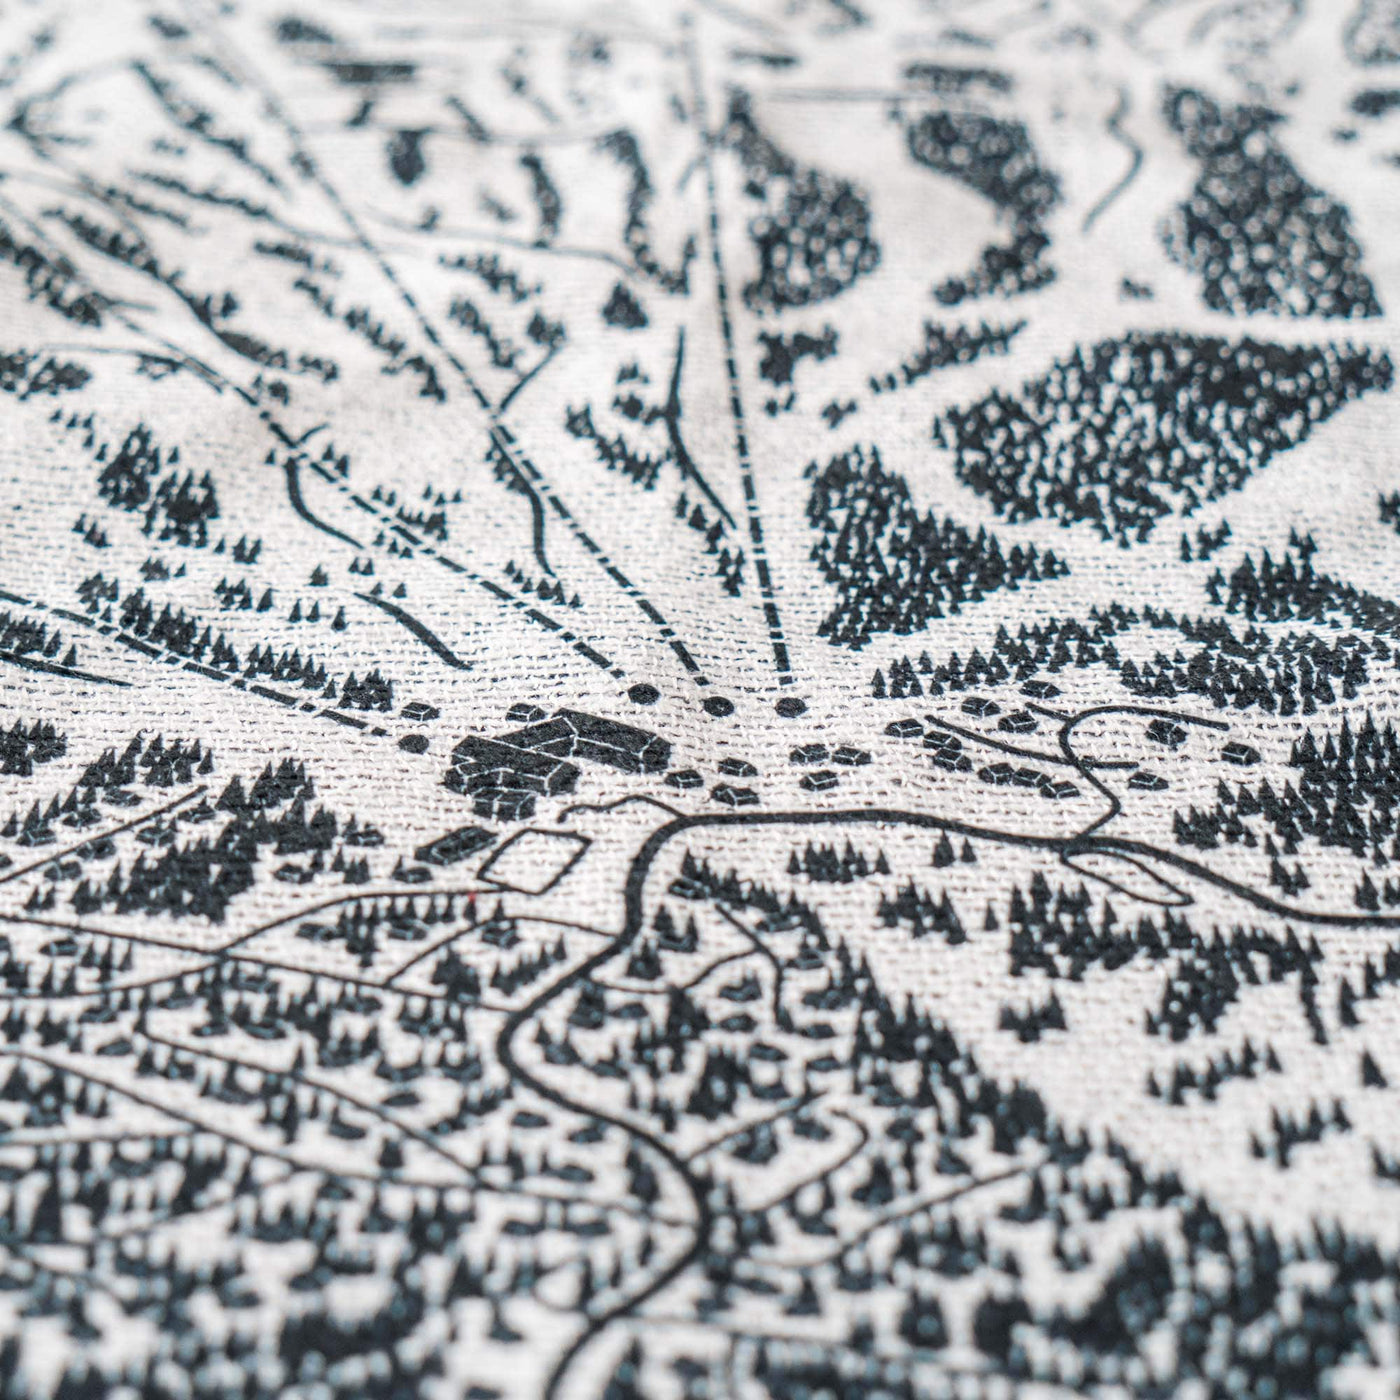 Winter Park, Colorado Ski Trail Map Blankets